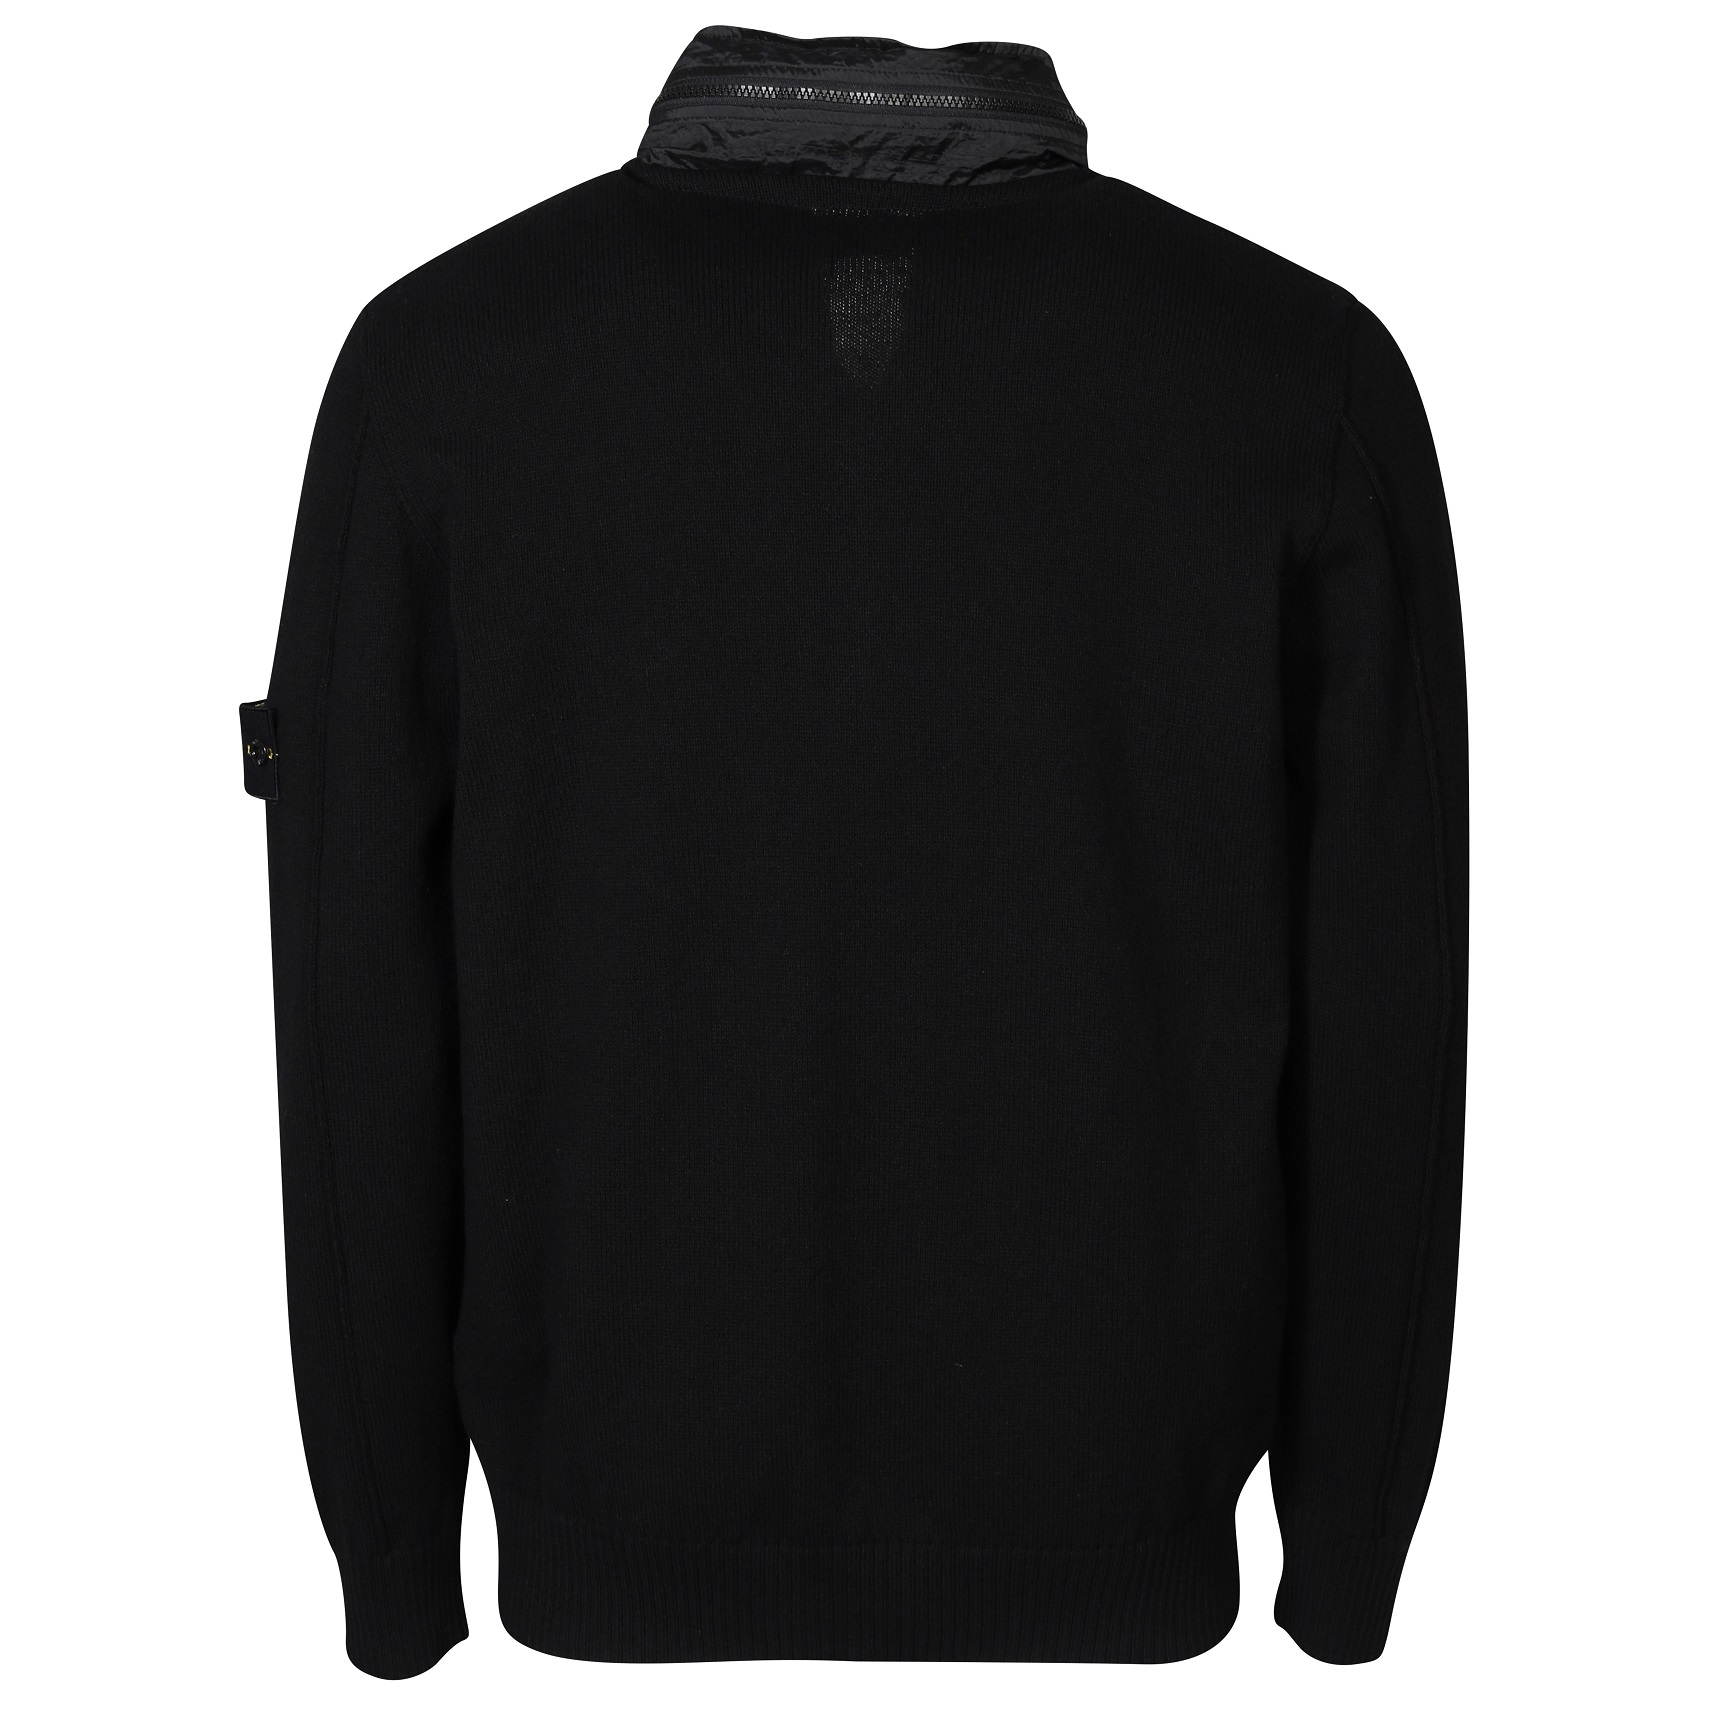 STONE ISLAND Cotton Knit Zip Jacket in Black 2XL